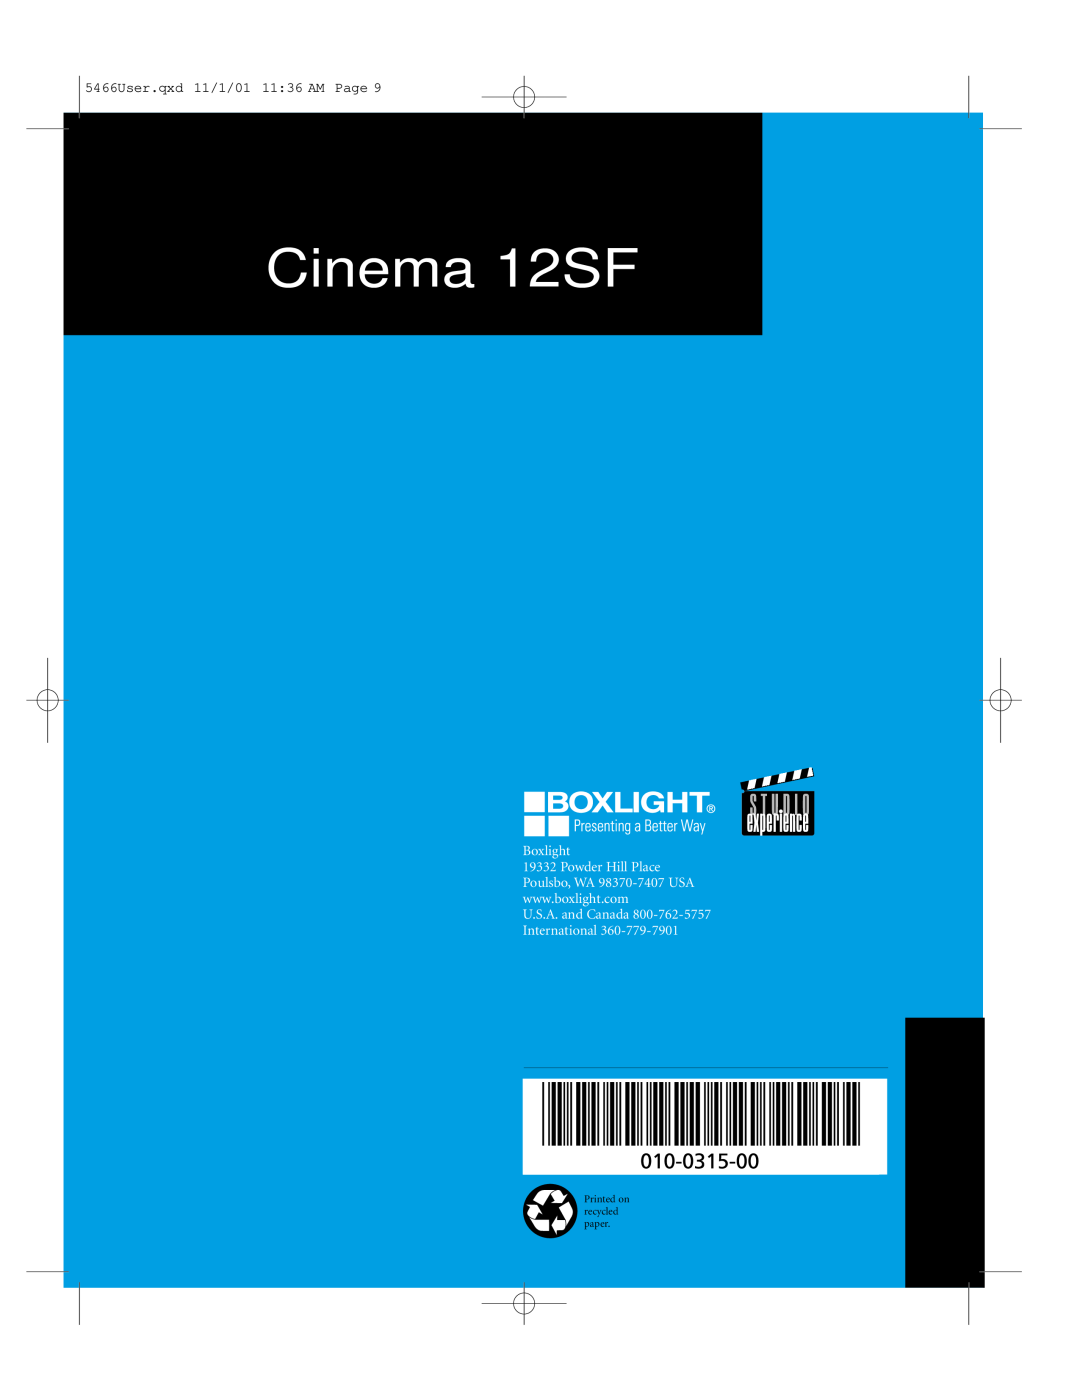 BOXLIGHT manual Cinema 12SF, 5466User.qxd 11/1/01 1136 AM Page, Boxlight, U.S.A. and Canada 800-762-5757 International 